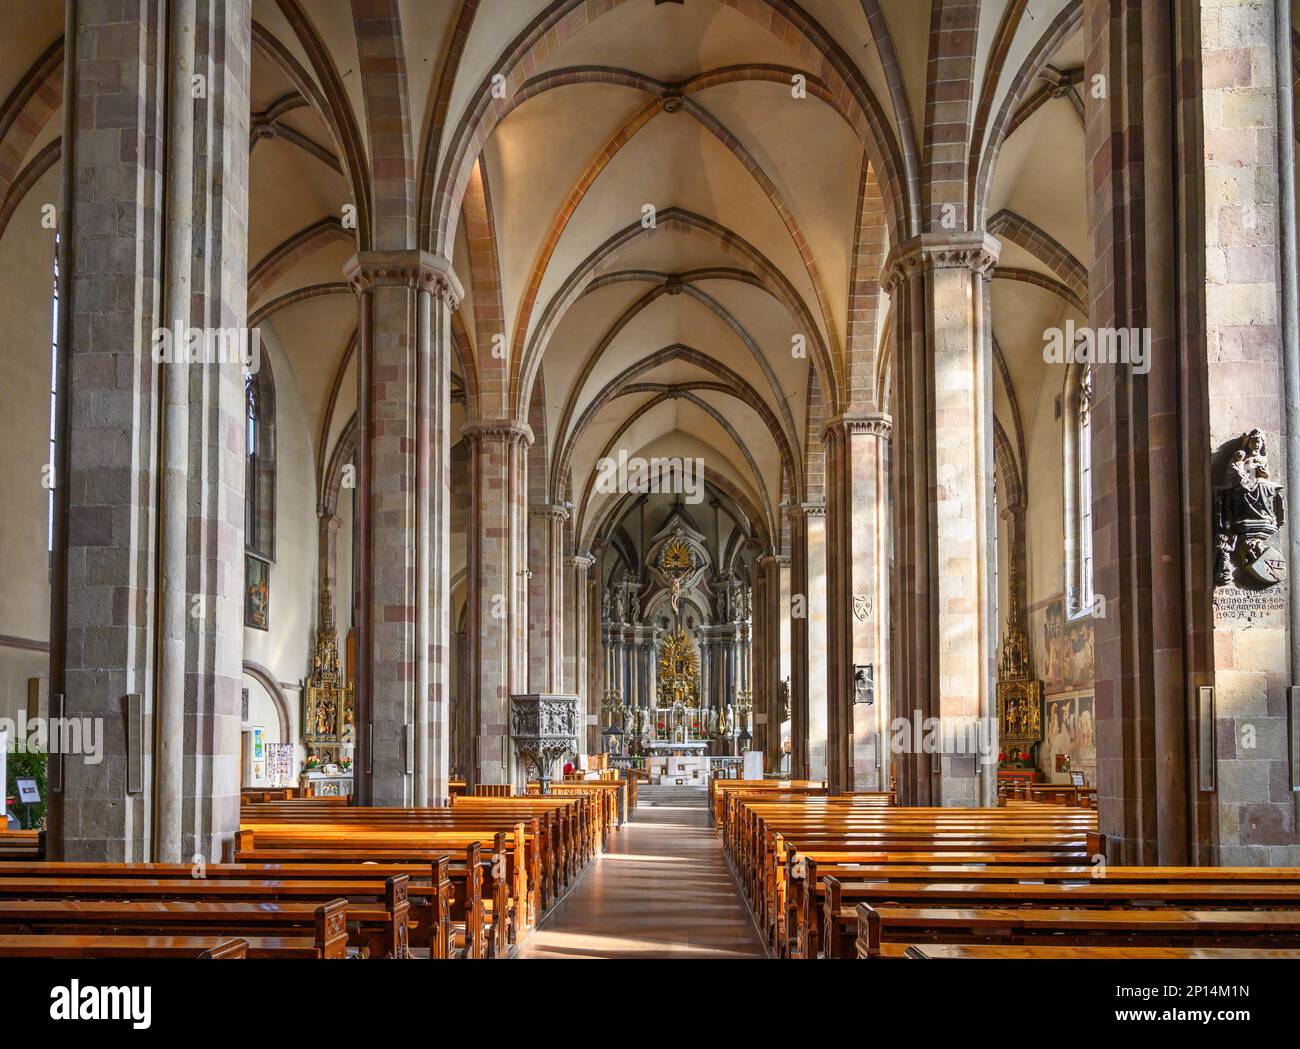 Innere der Kathedrale von Bozen (Duomo di Bozen), Bozen, Italien Stockfoto